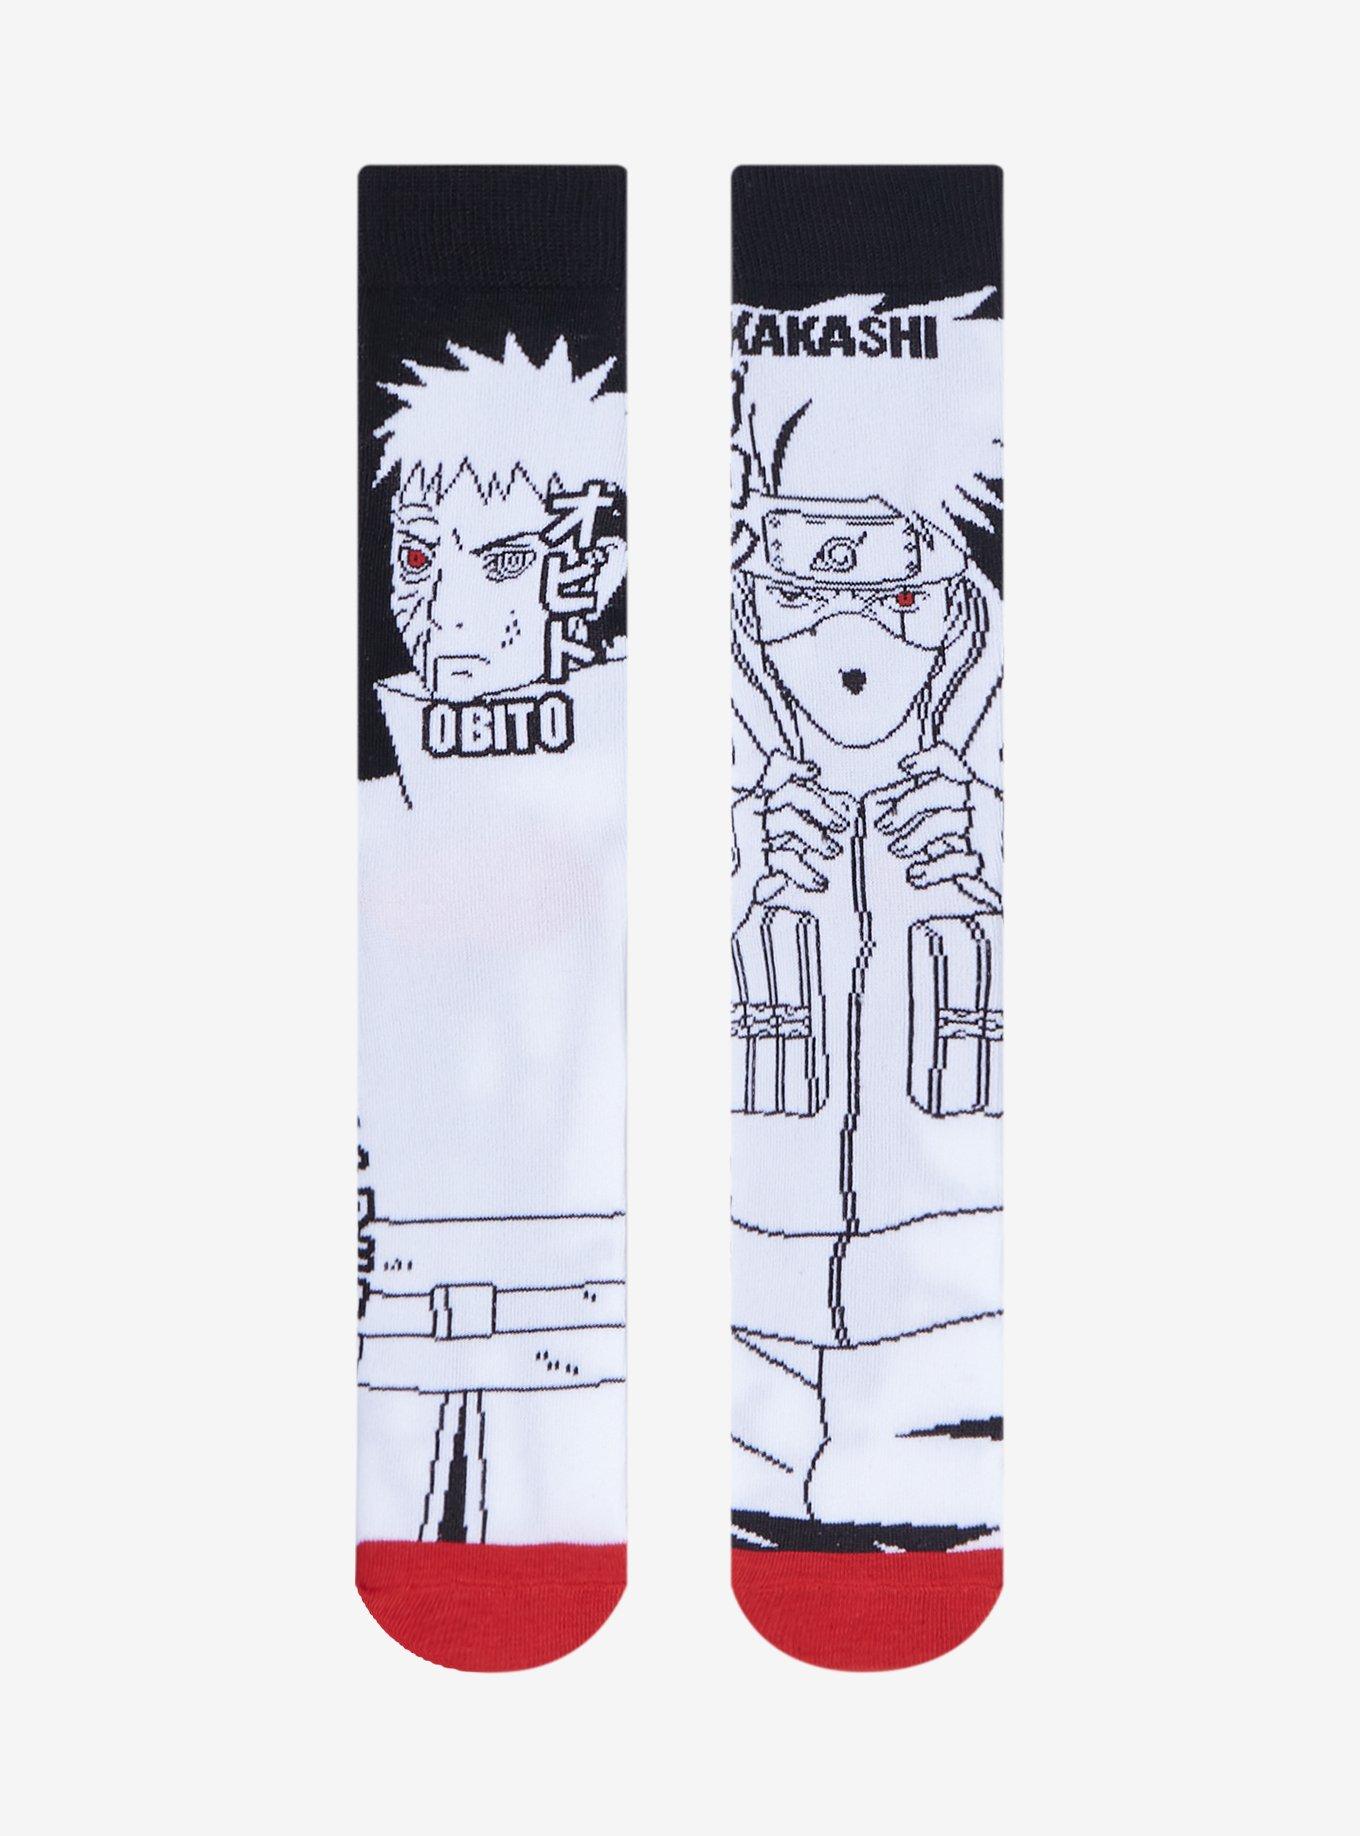 Naruto Shippuden Obito & Kakashi Mismatched Crew Socks